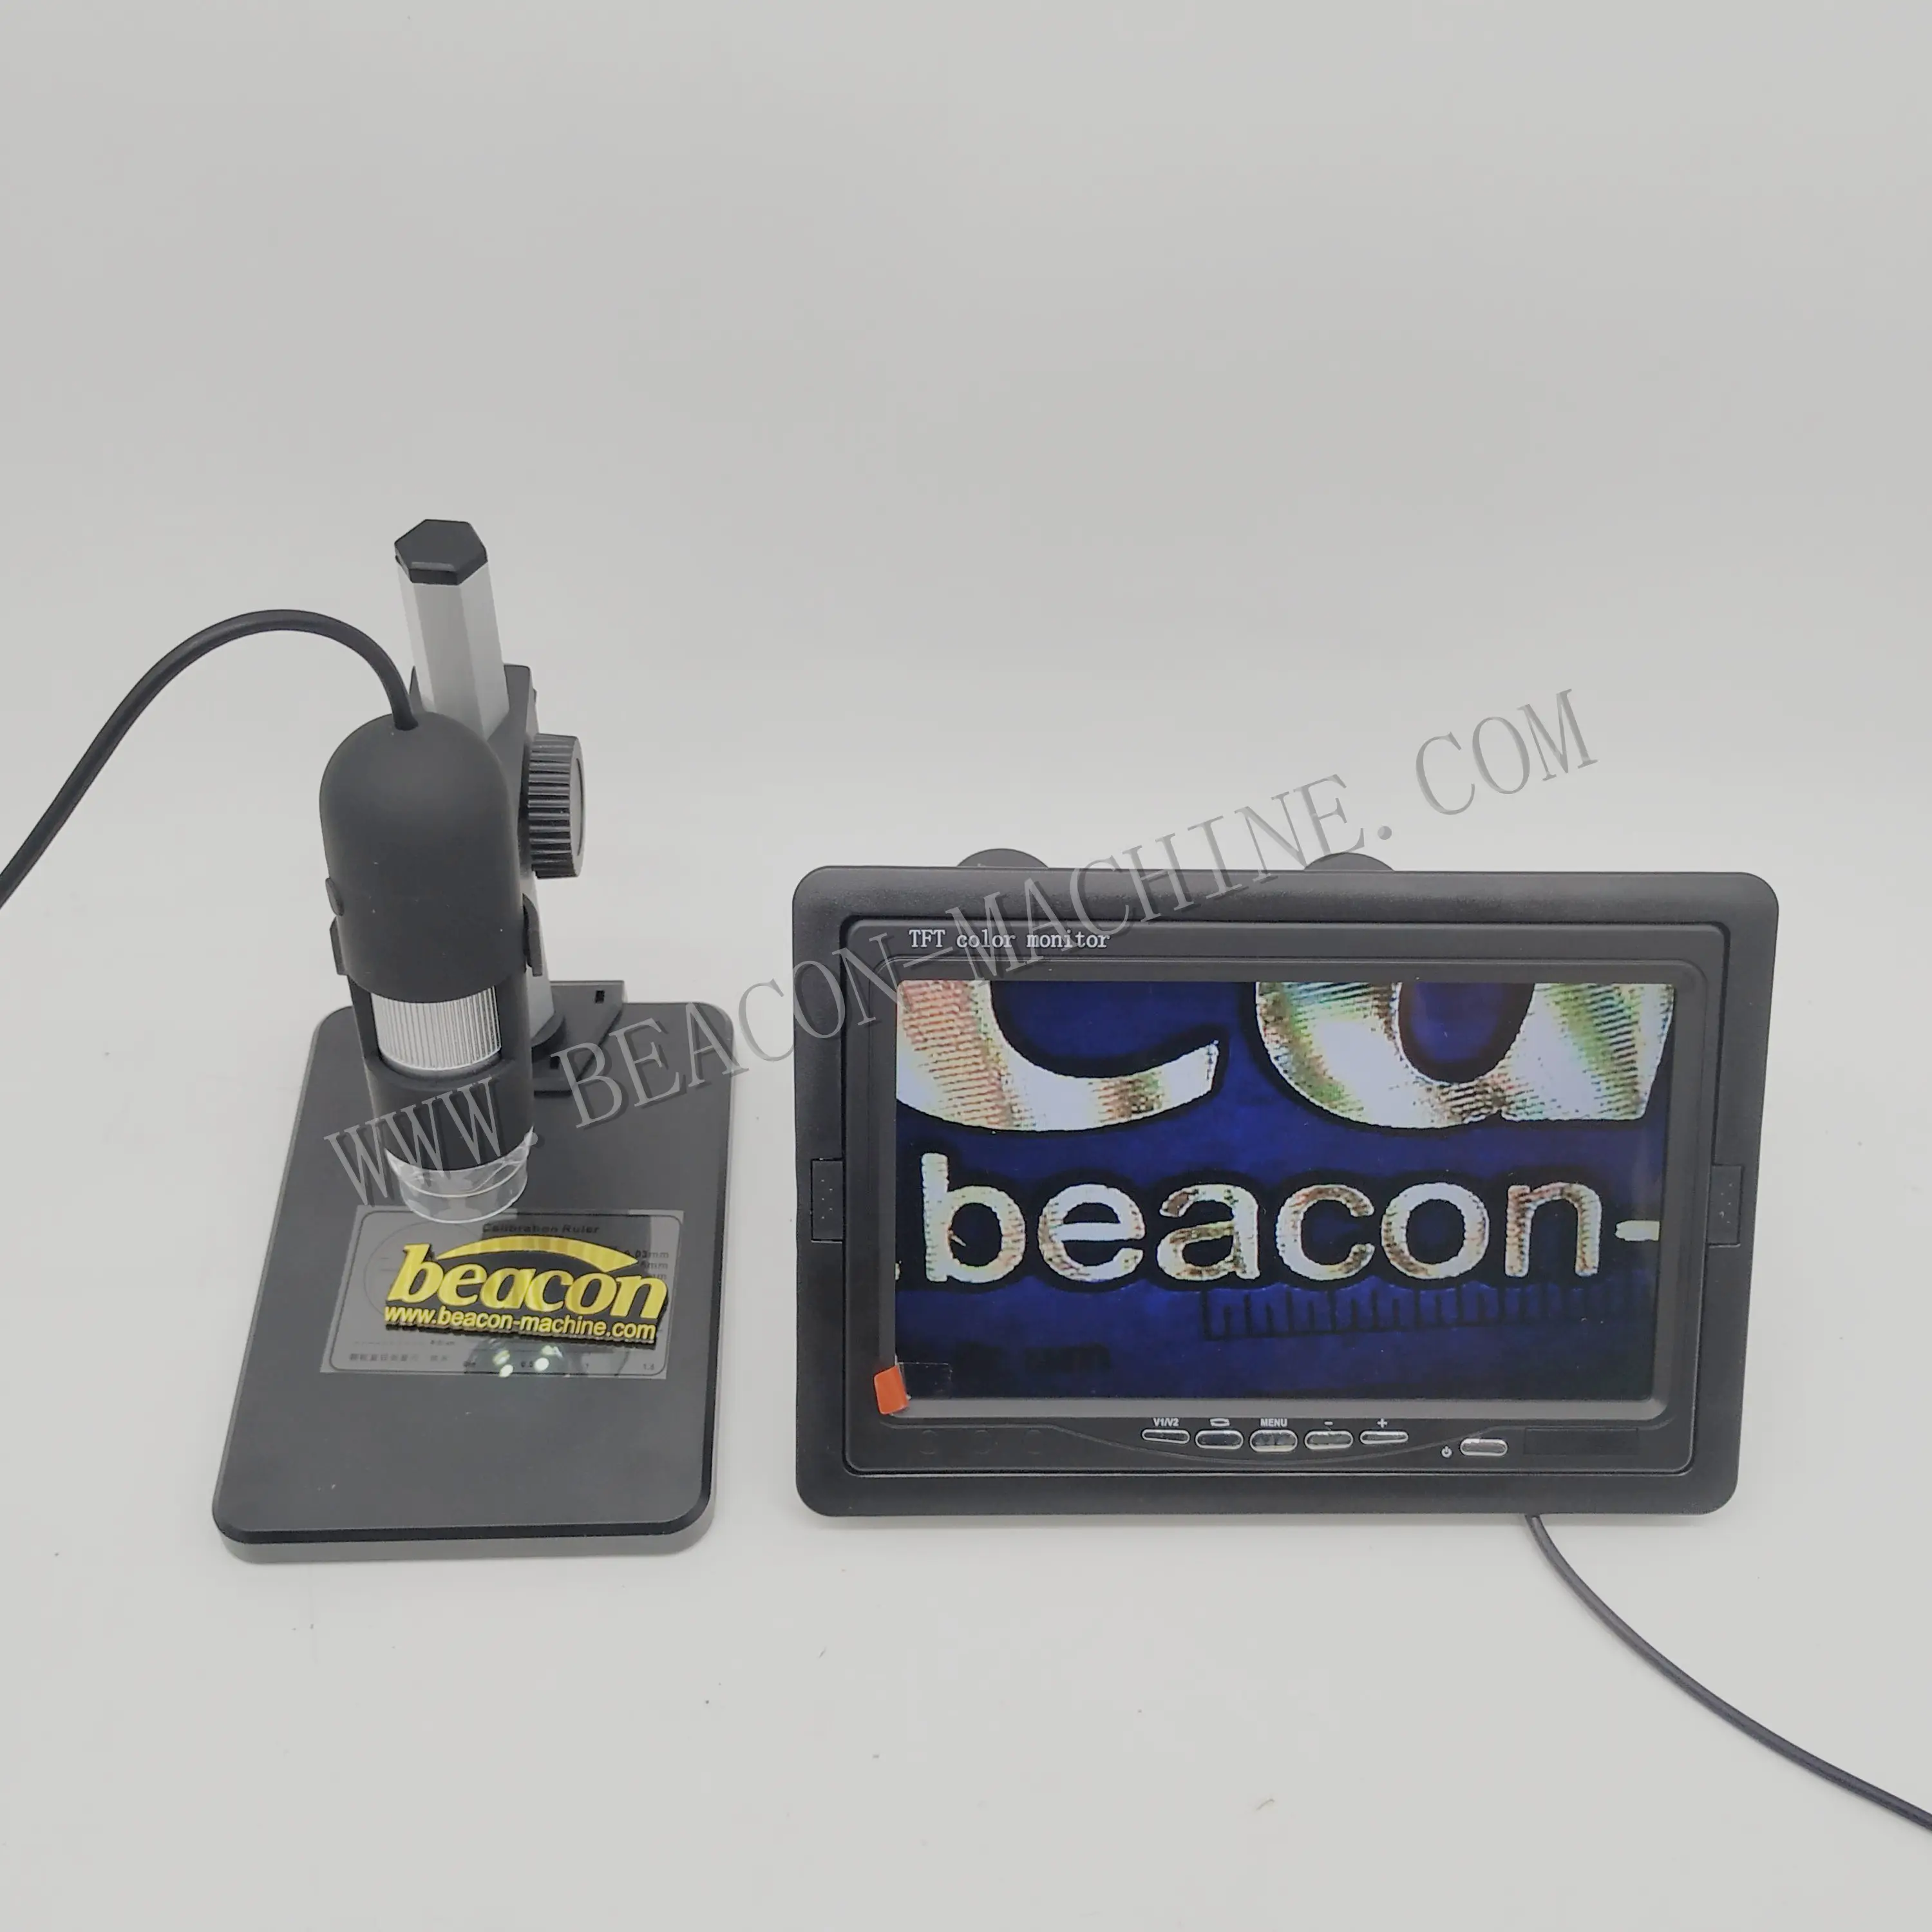 बीकन डीजल उपकरण इलेक्ट्रॉनिक डिजिटल माइक्रोस्कोप